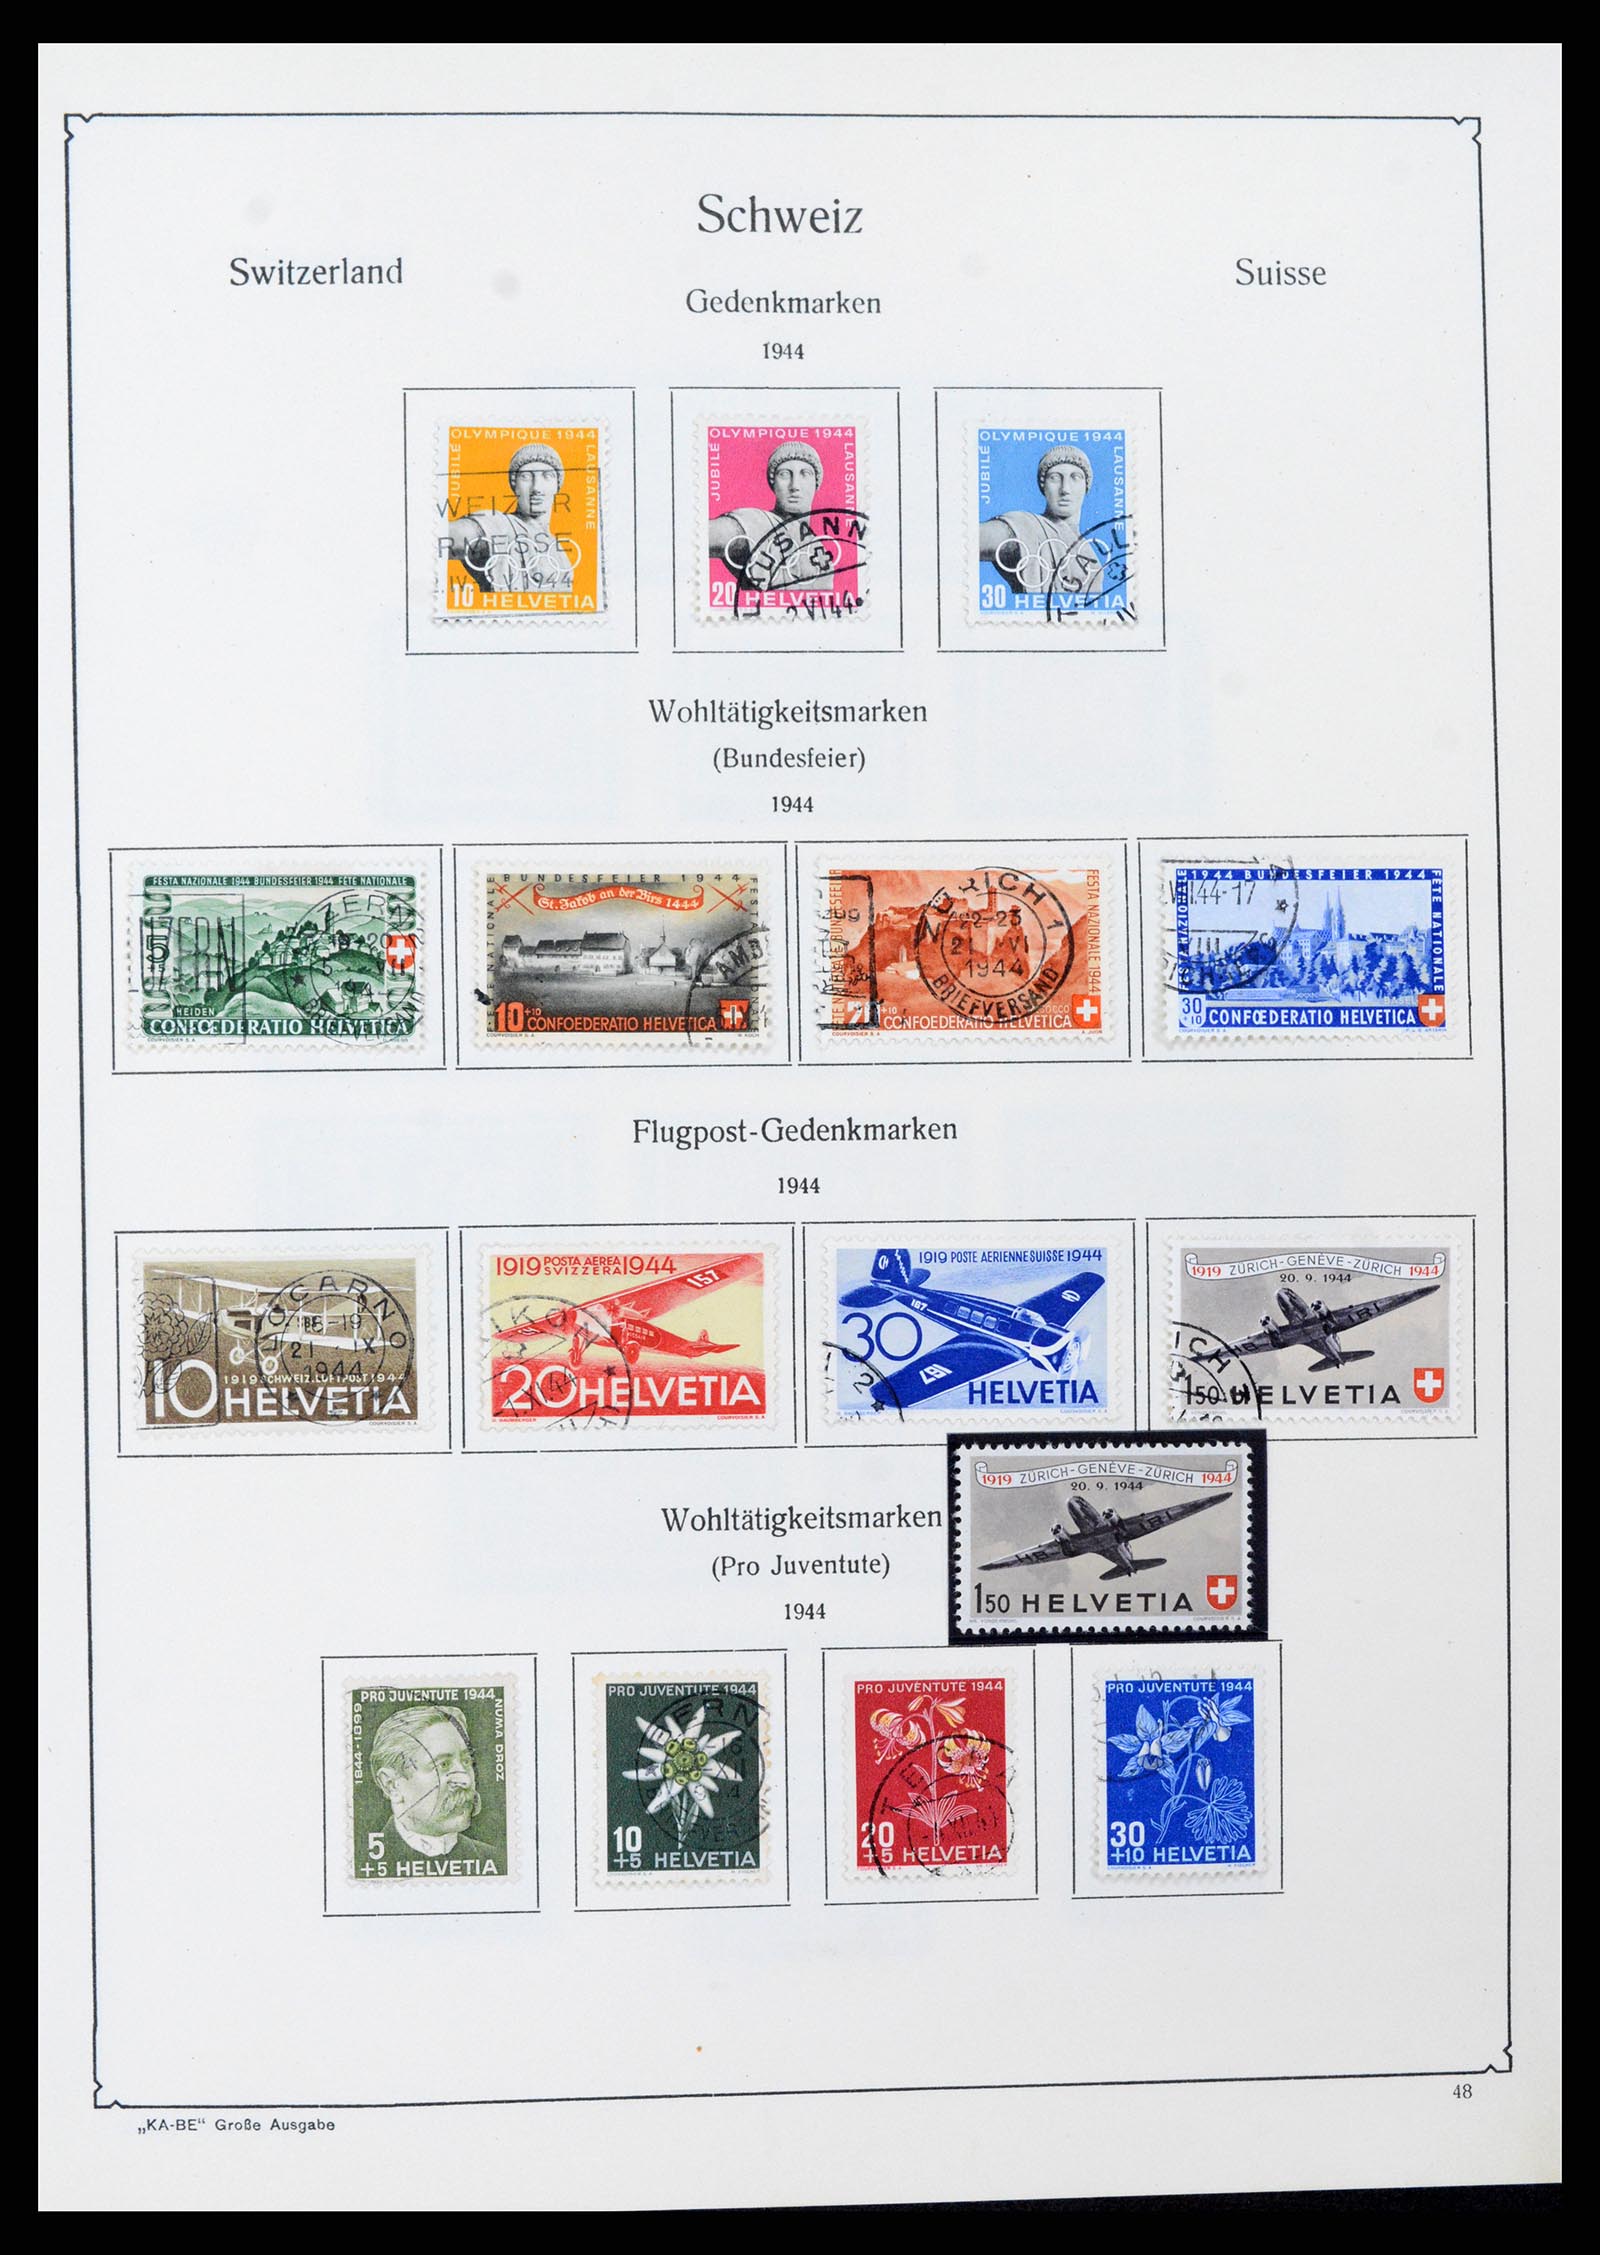 37588 046 - Stamp collection 37588 Switzerland 1854-1974.